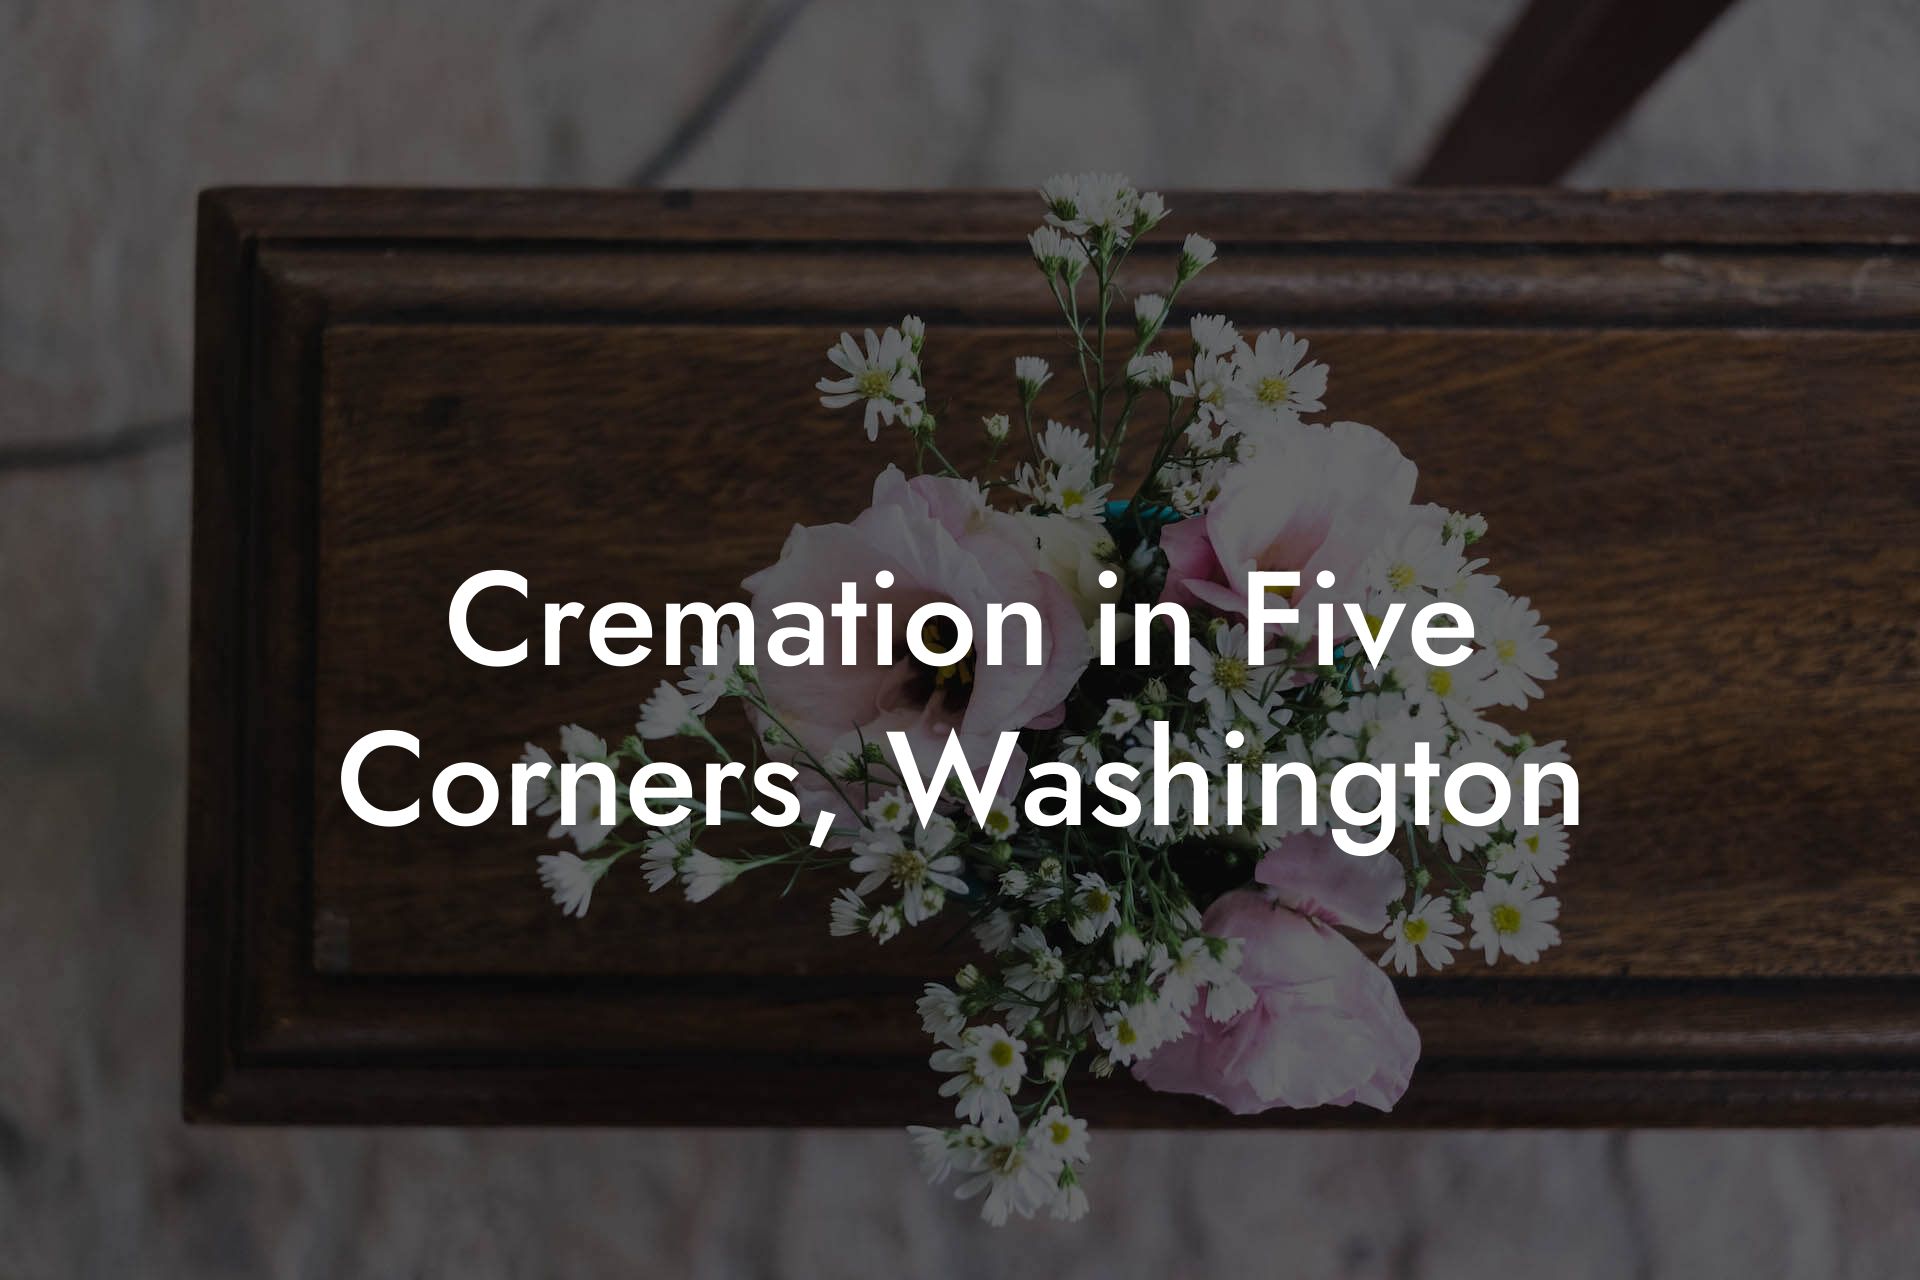 Cremation in Five Corners, Washington